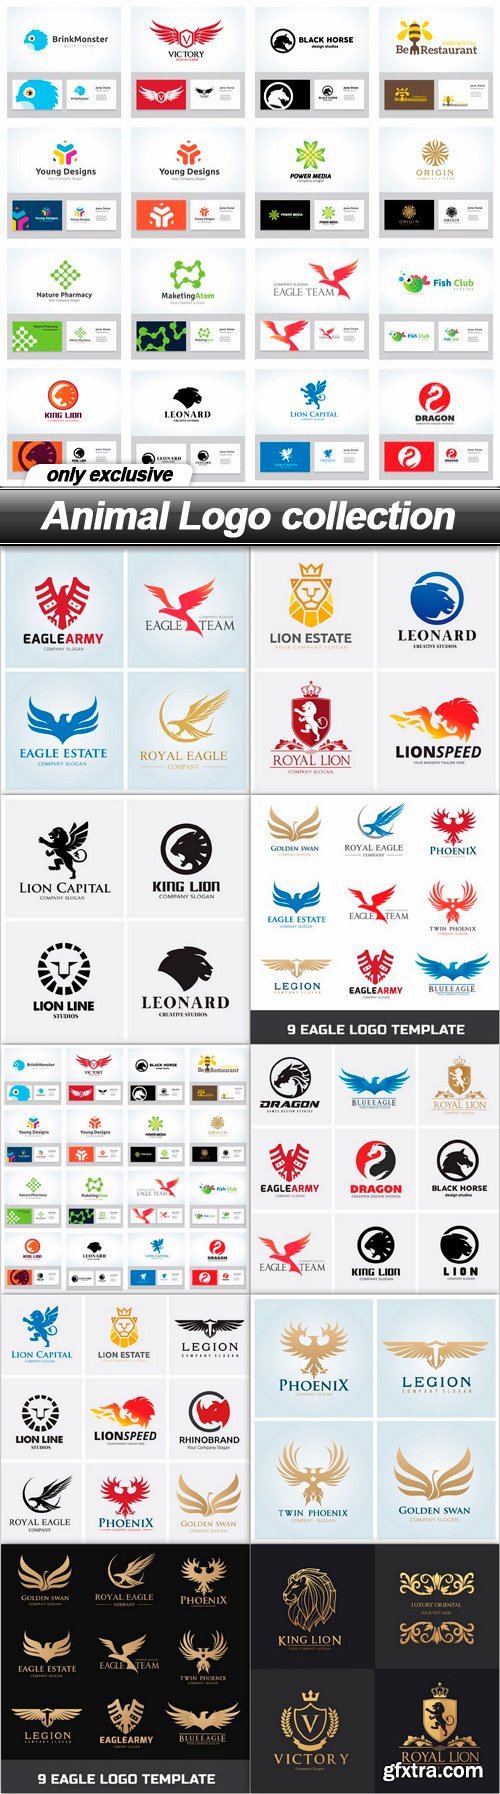 Animal Logo collection - 10 EPS